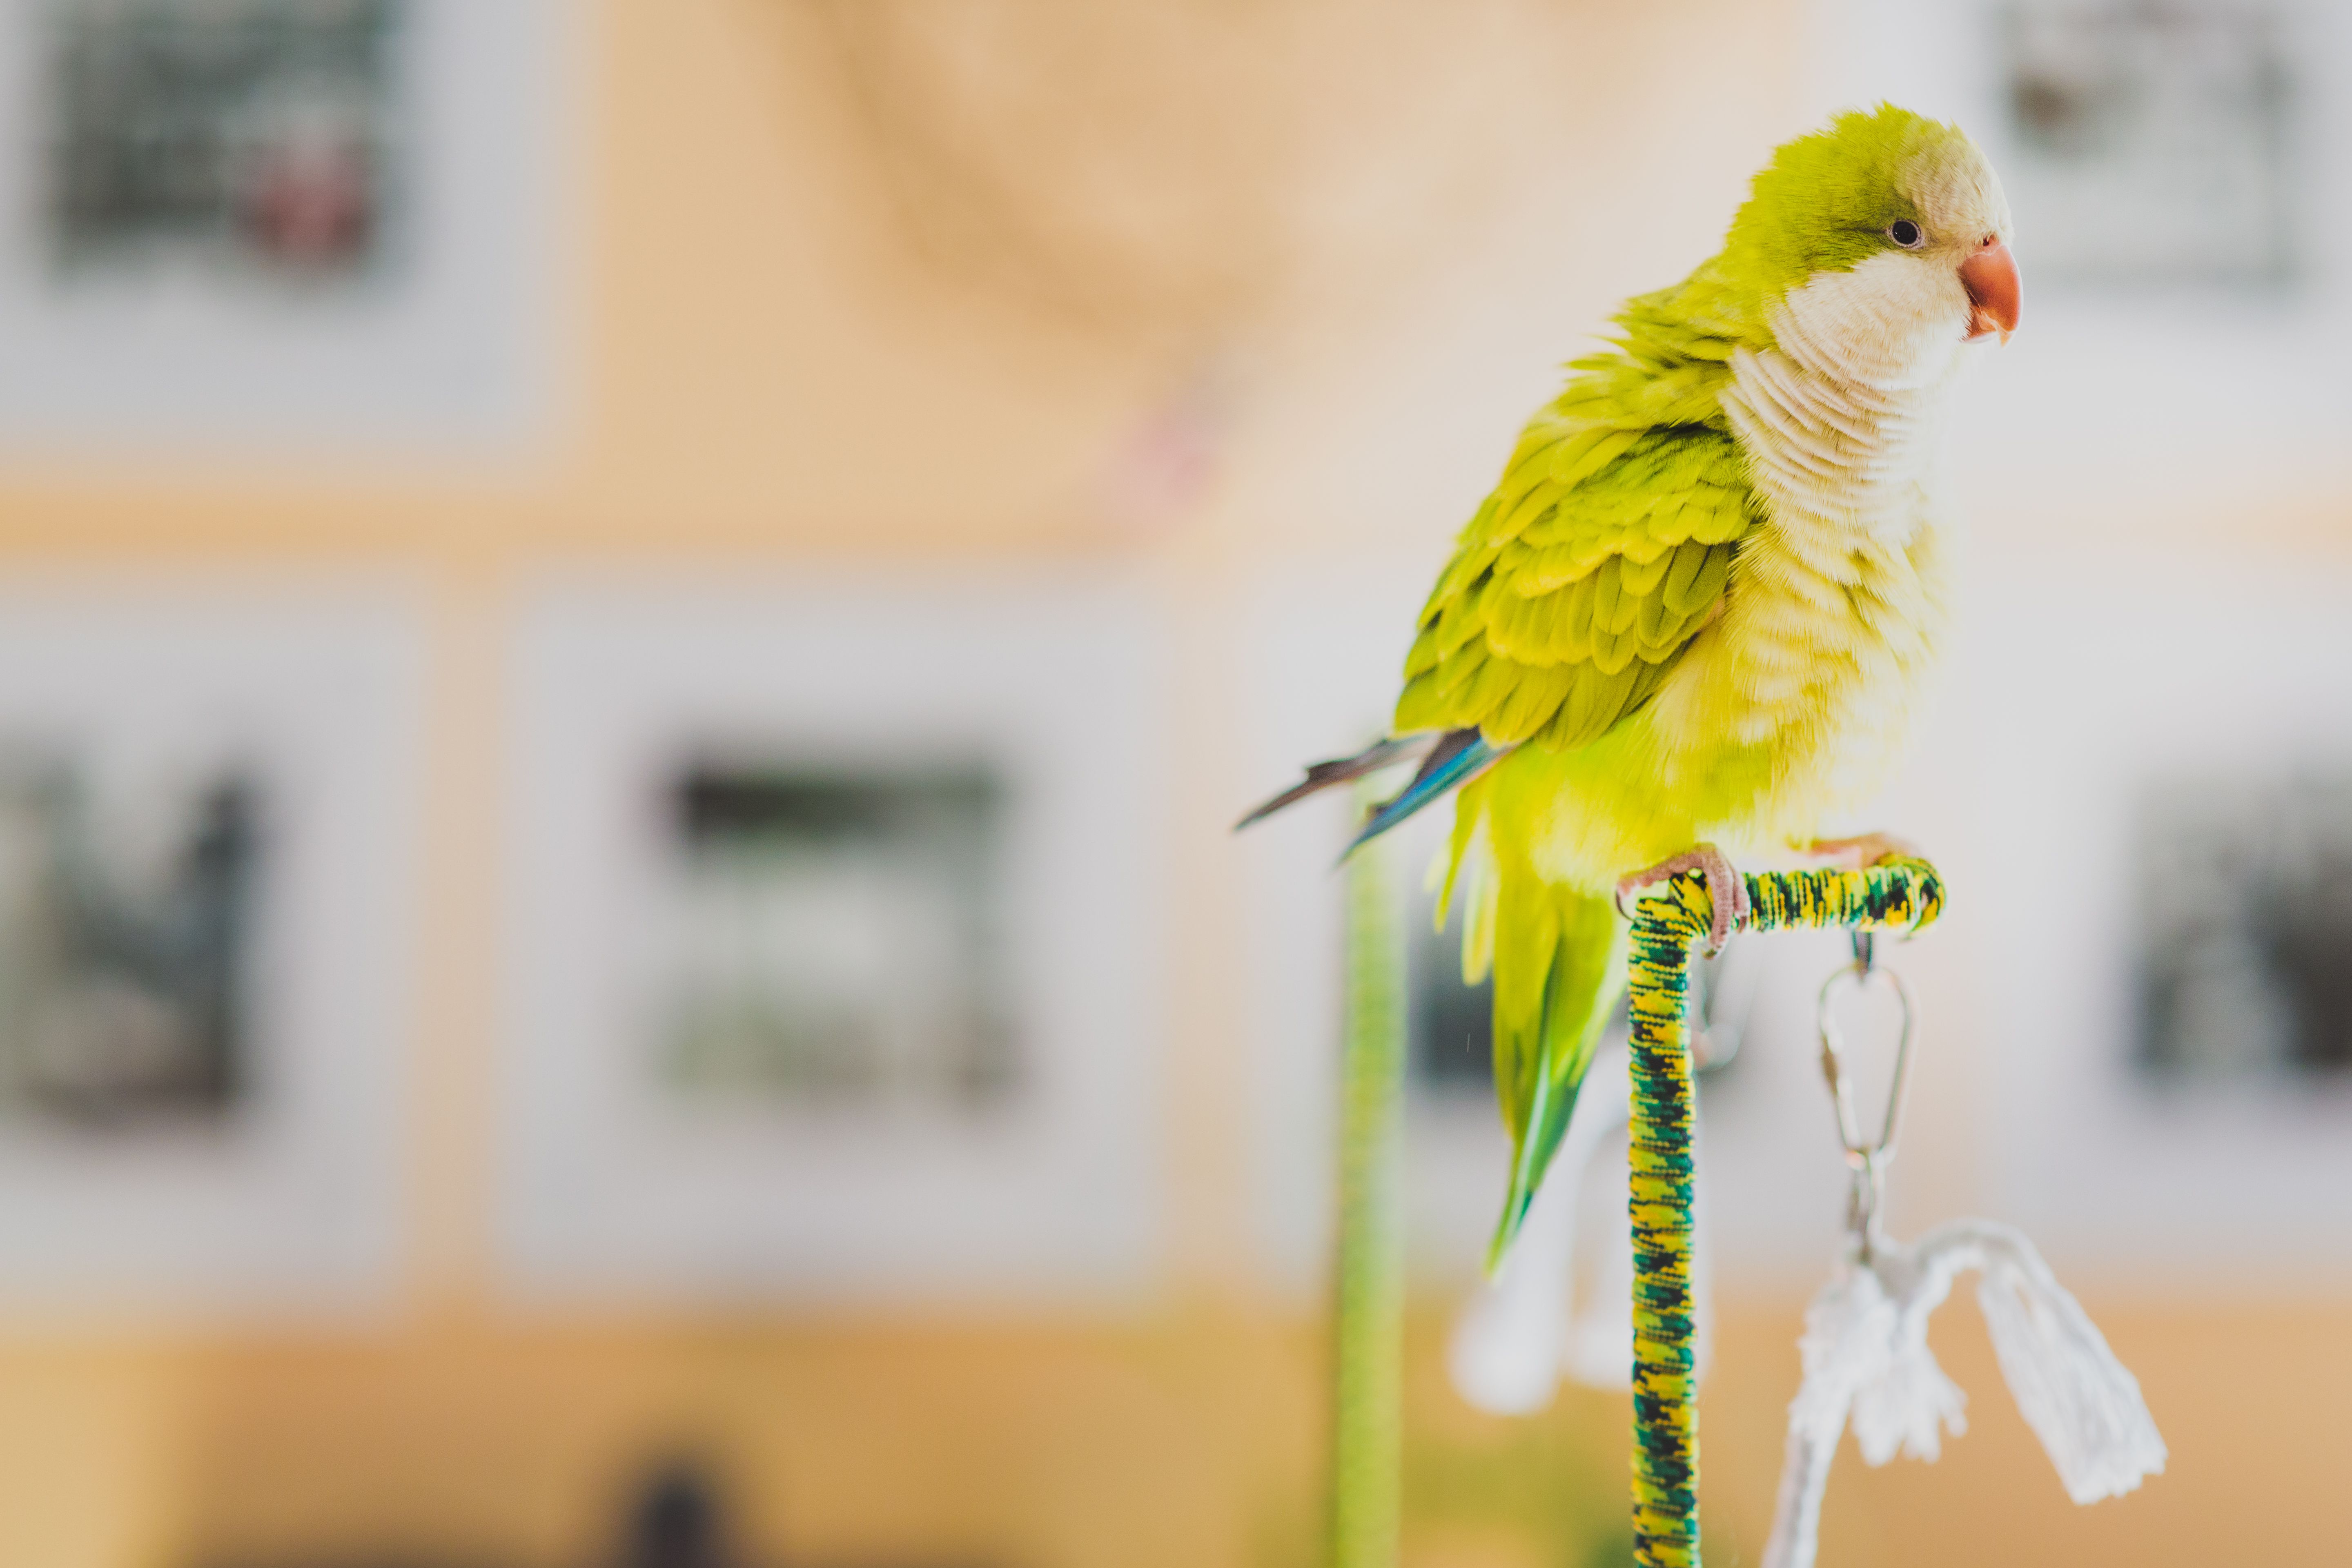 Monk parakeet on a perch